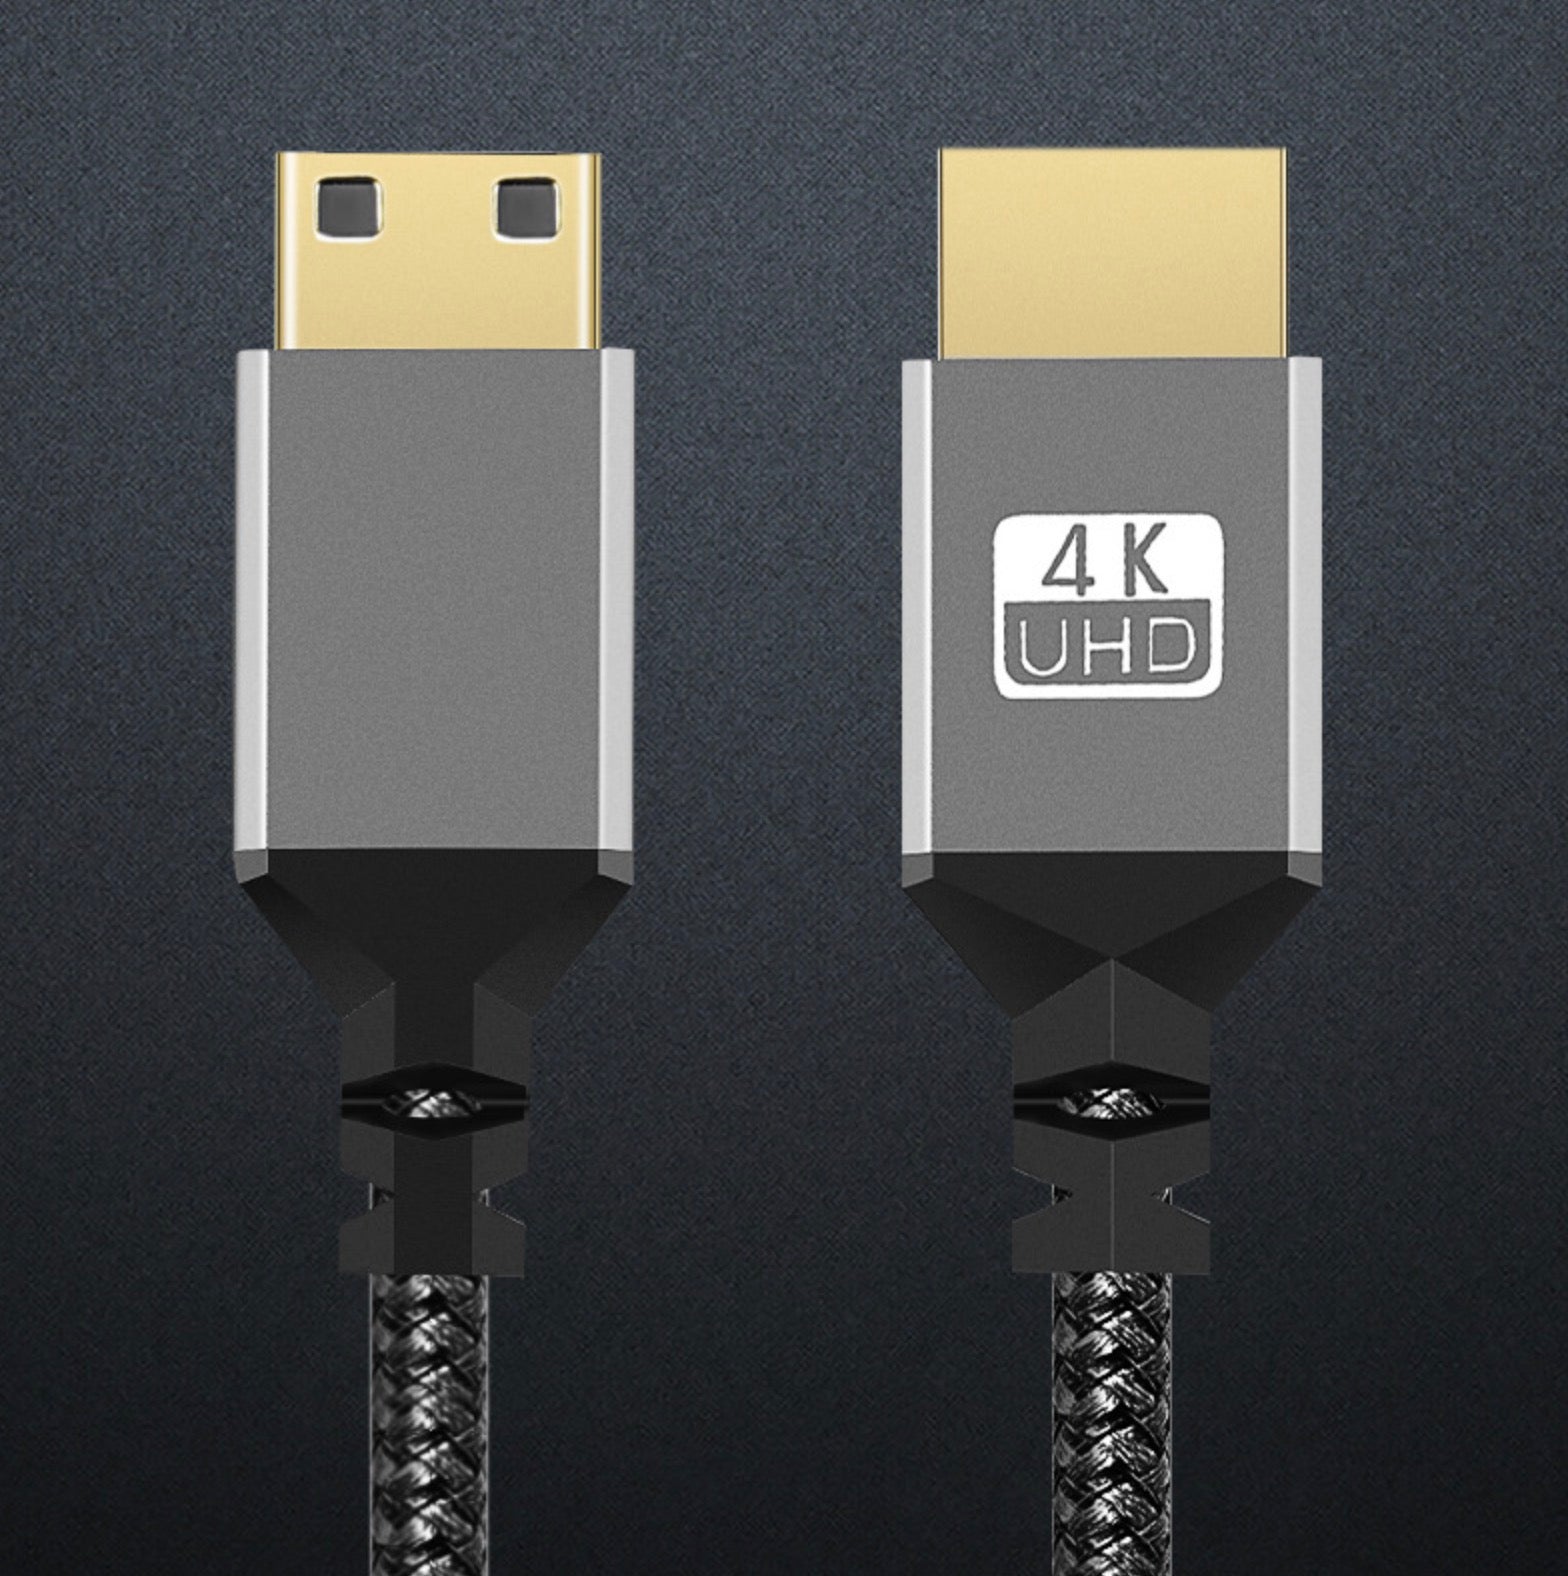 Mini HDMI 2.0 4K@60Hz Male to HDMI Male Braided Video Cable 0.3m